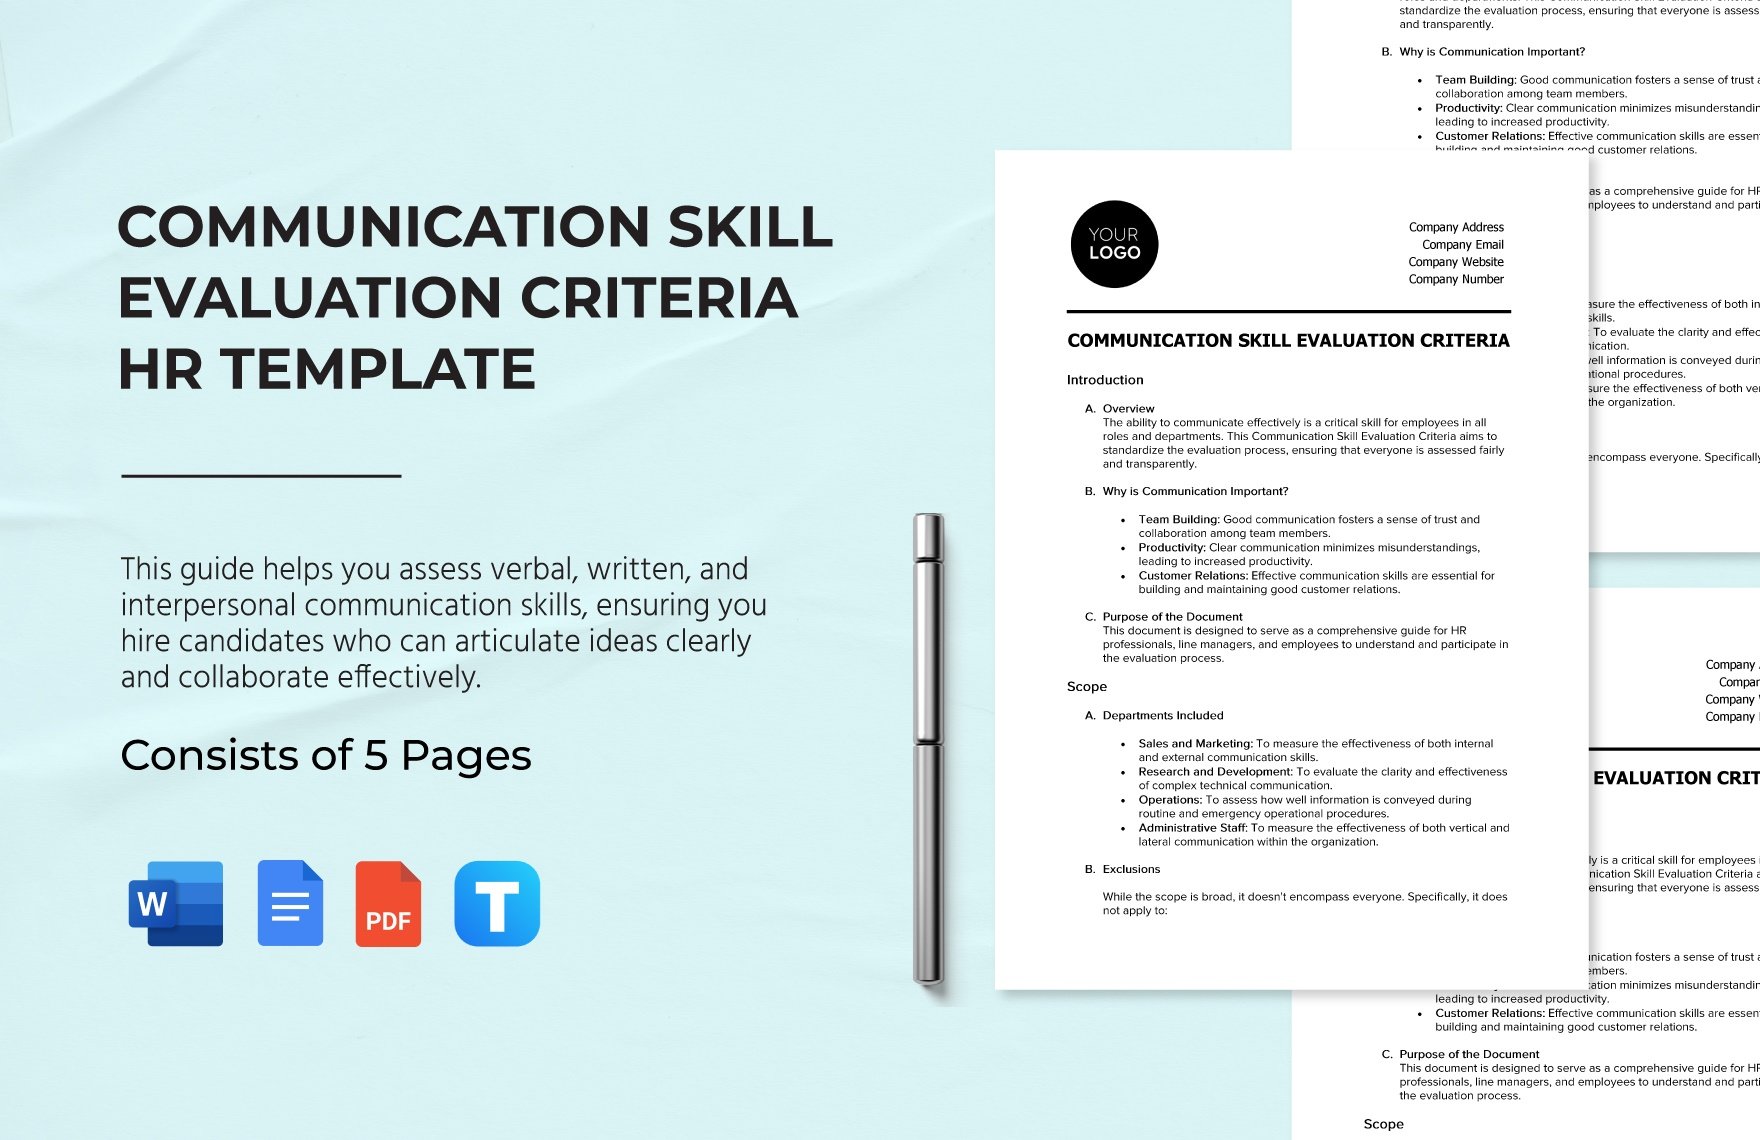 Communication Skill Evaluation Criteria HR Template